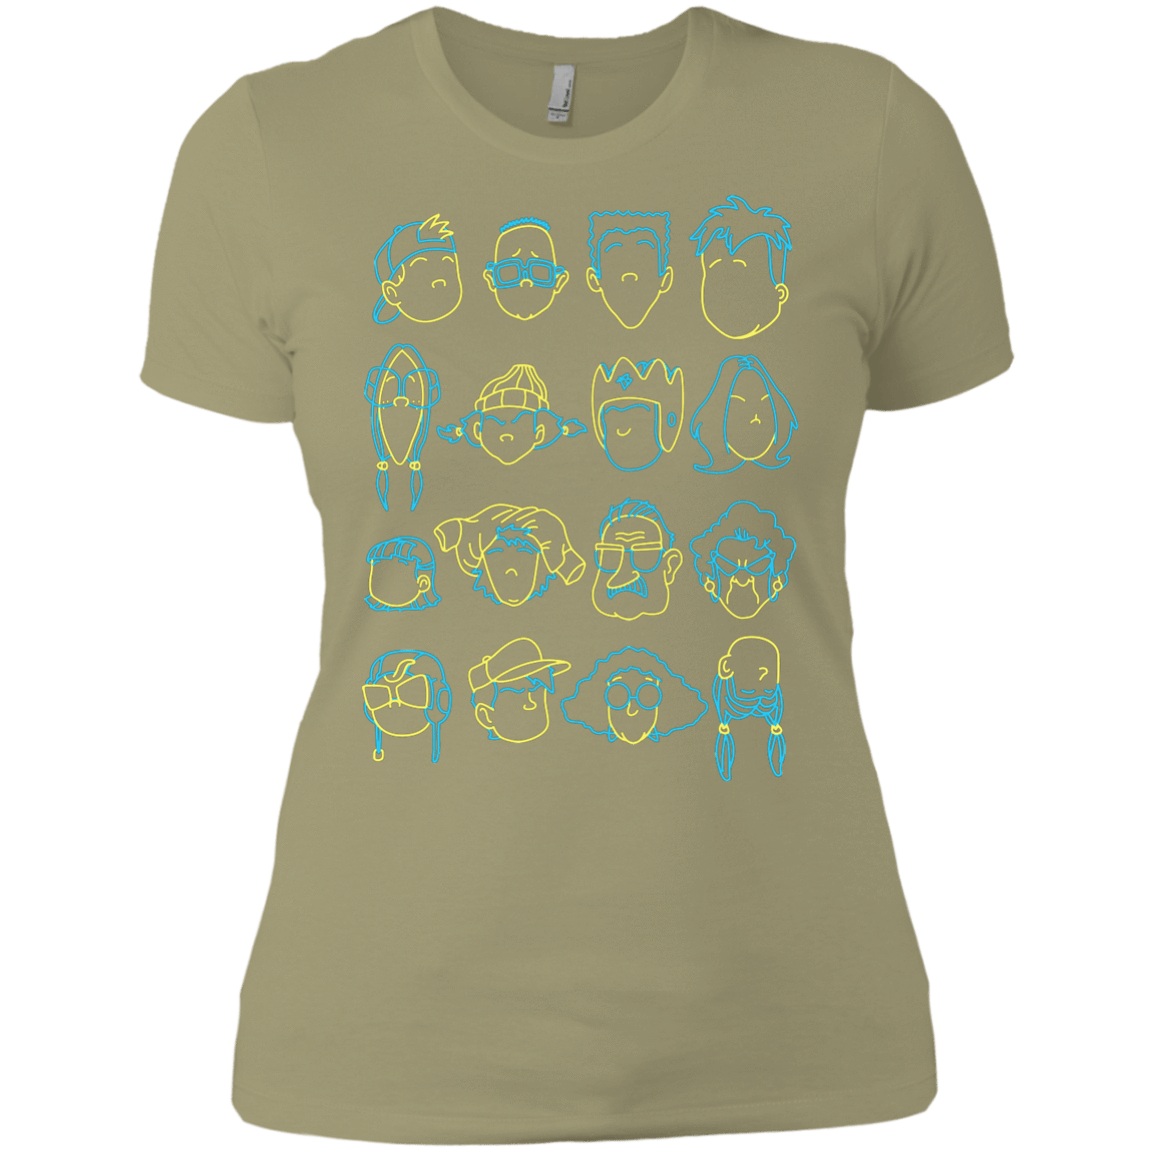 T-Shirts Light Olive / X-Small RECESS Women's Premium T-Shirt